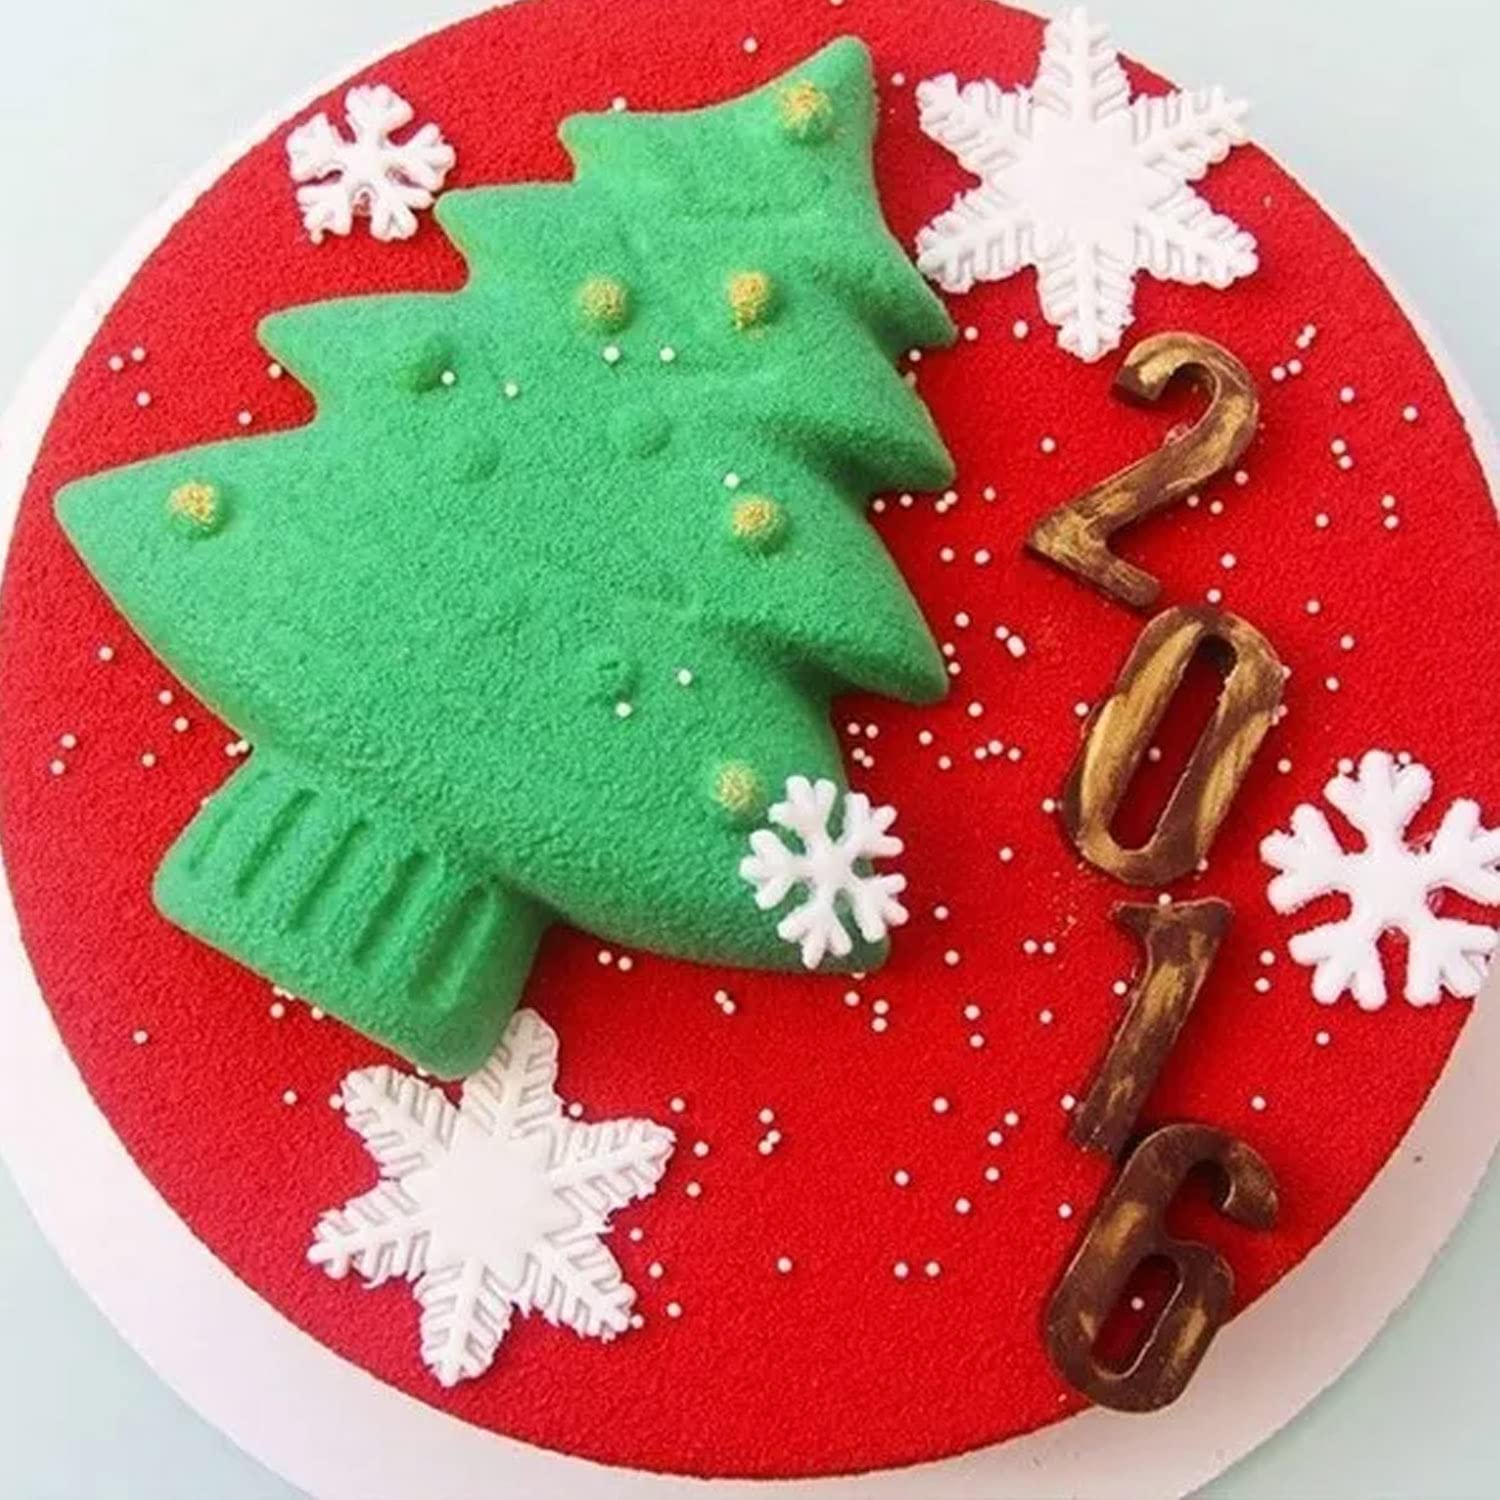 JAYVAR Christmas Tree Silicone Cake Baking Mold Cake Pan,Chocolate Ice Cube Tray DIY Mold,Reusable Non-Stick Cake Molds (Blue)